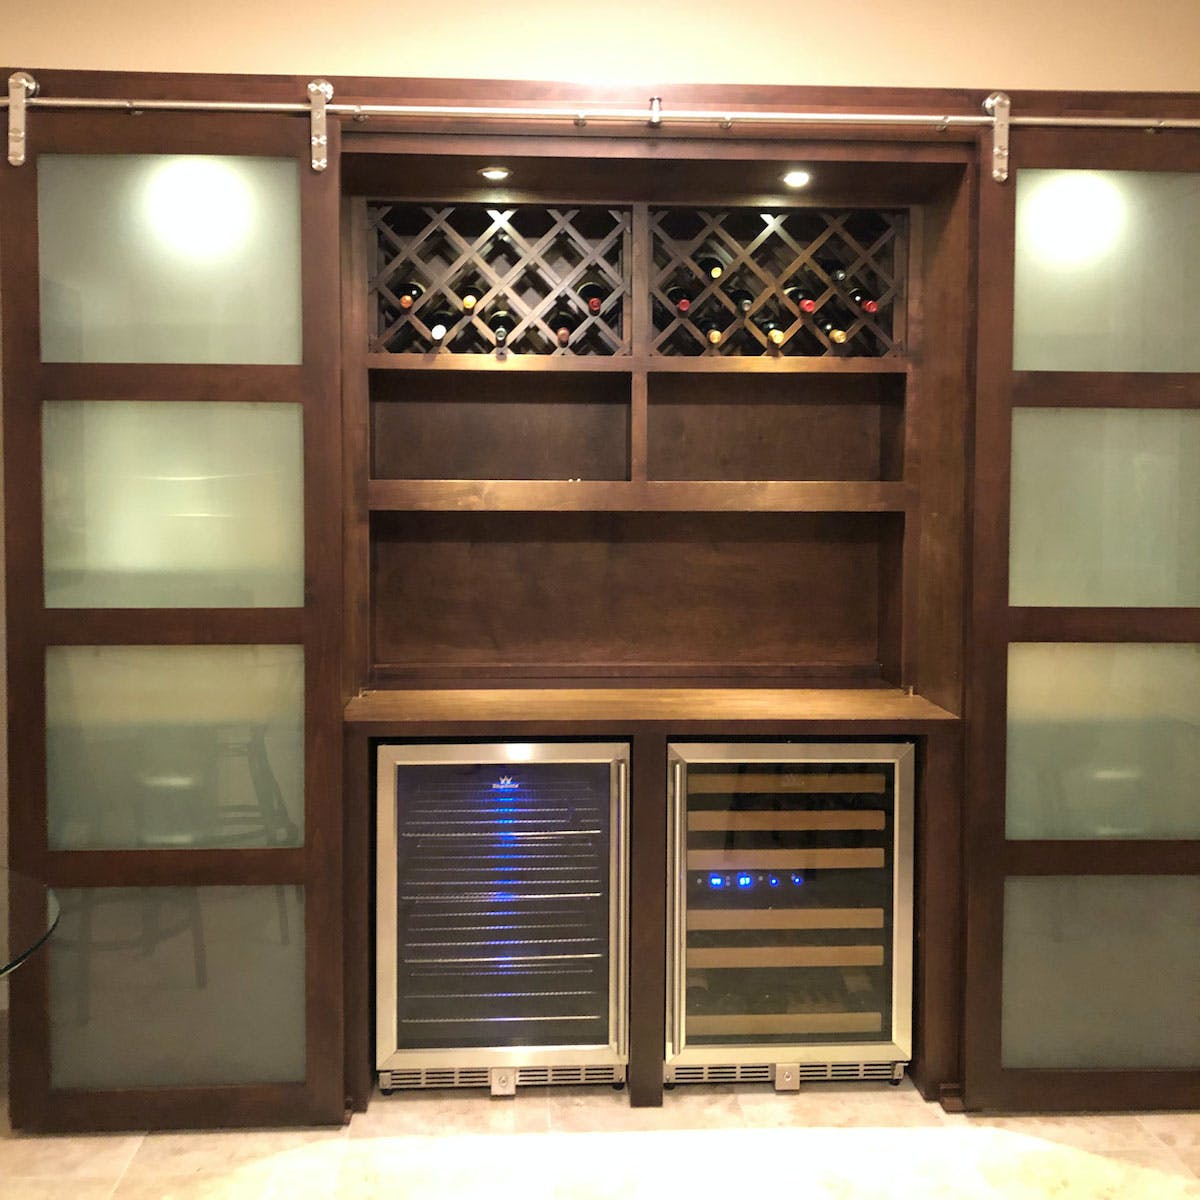 Kingsbottle 48 Inch Glass Door Wine And Beverage Fridge Center Built In KBU50BW3-FG-Wine Coolers-The Wine Cooler Club